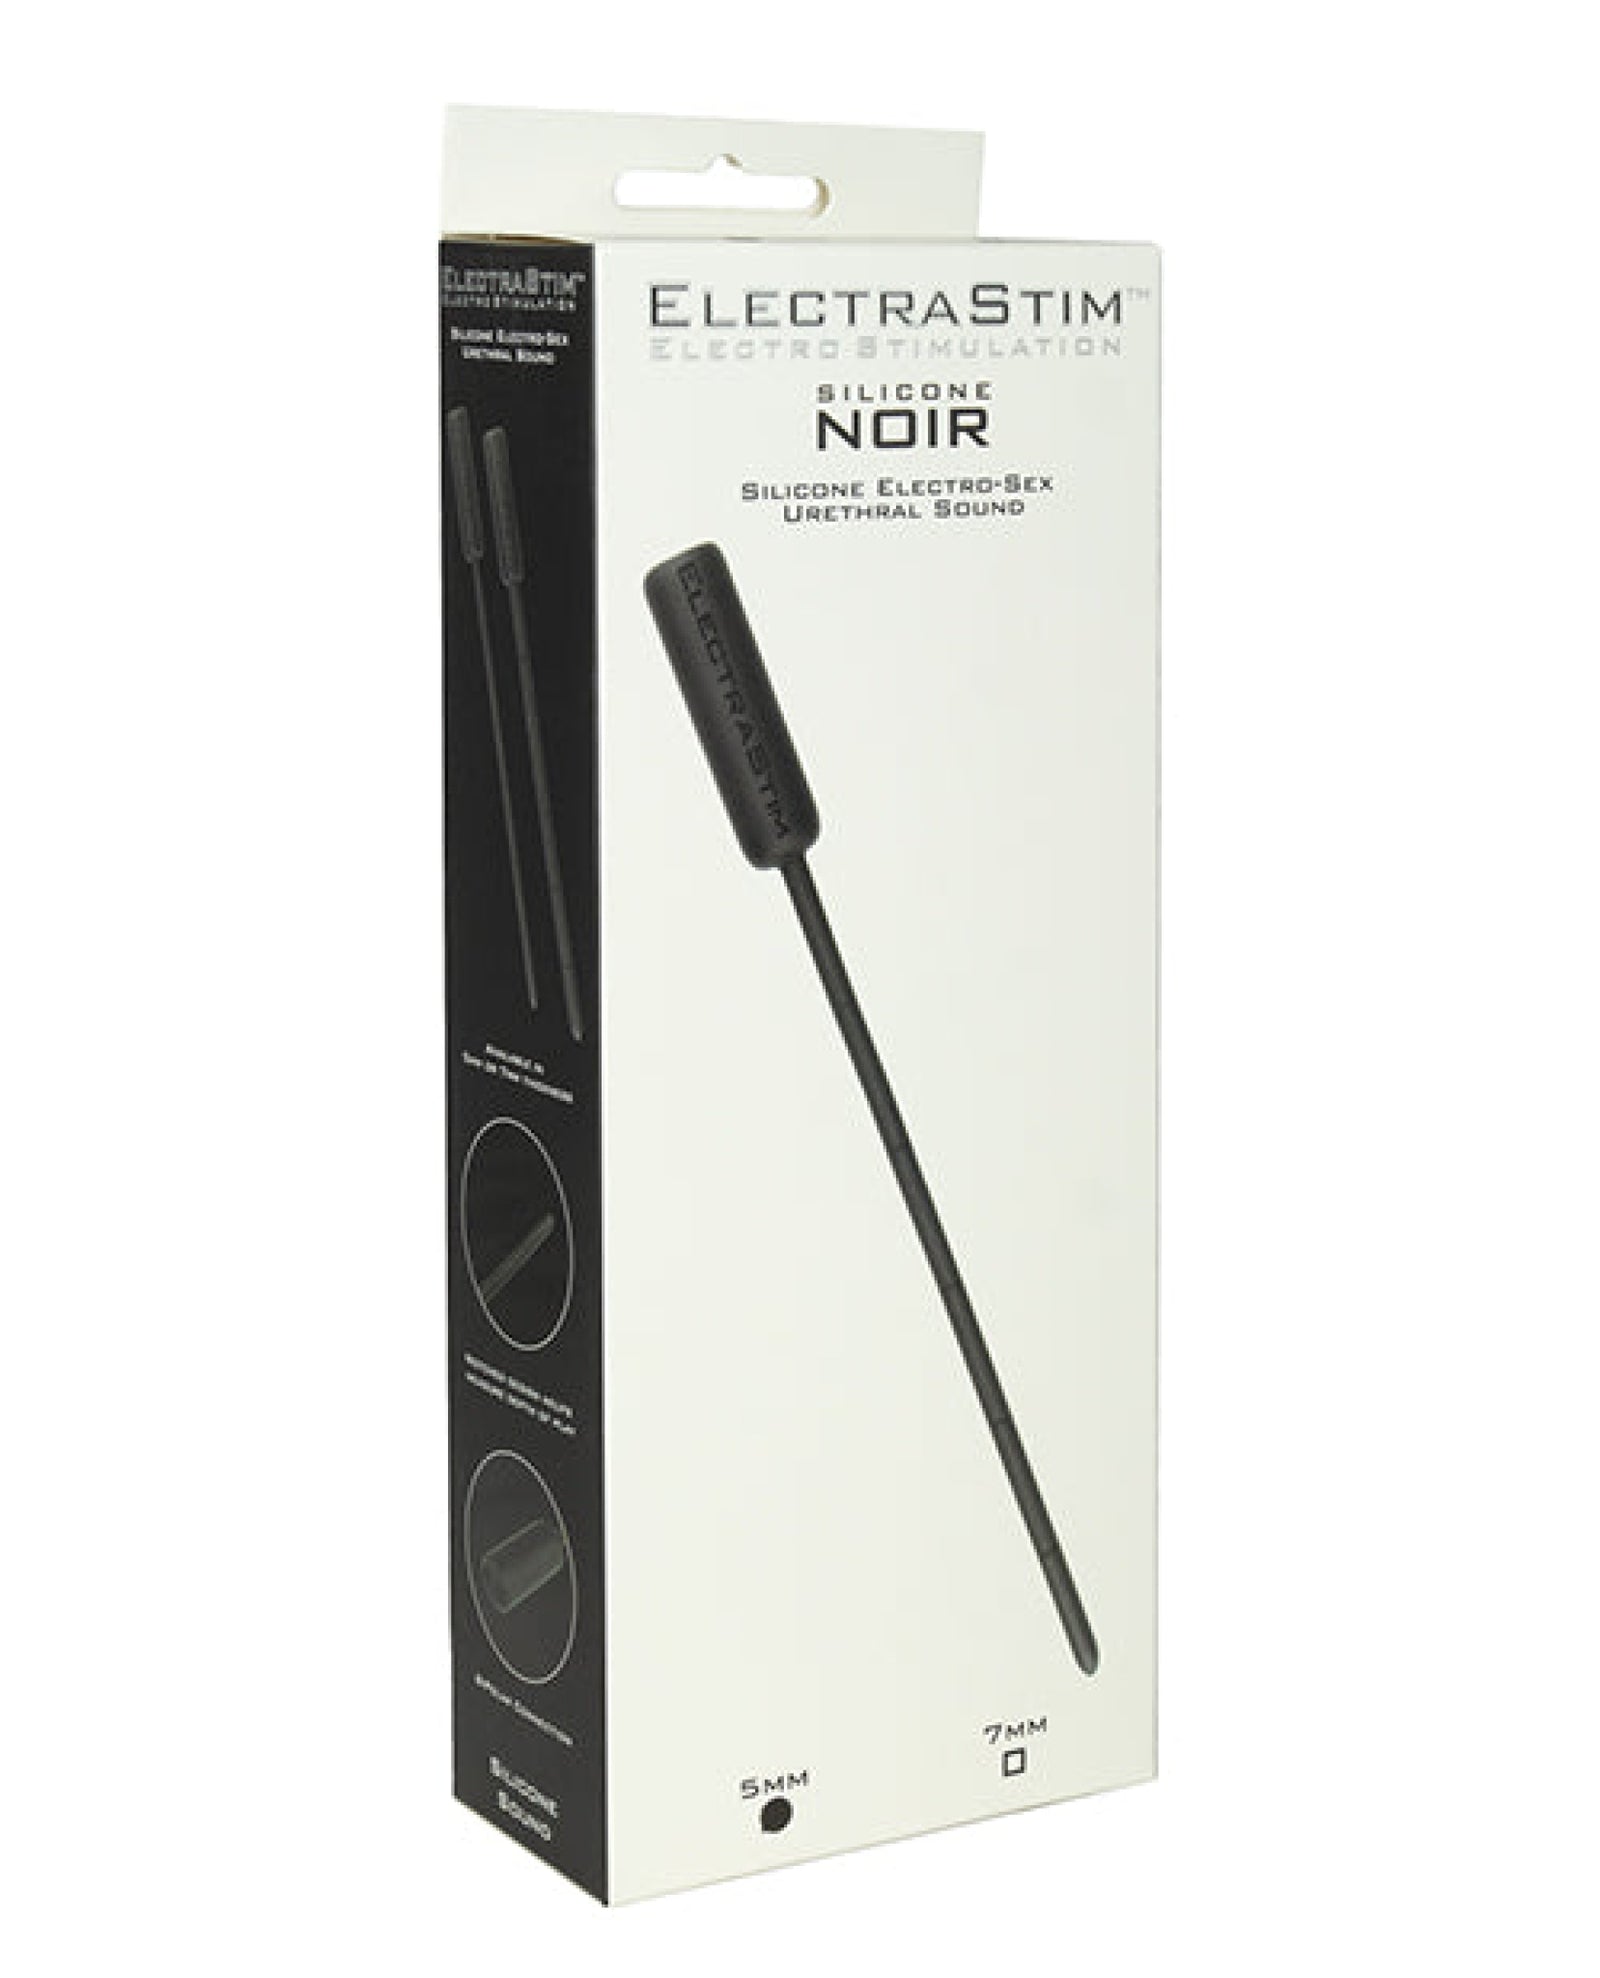 Electrastim Silicone Noir Flexible Electro Sound Electrastim